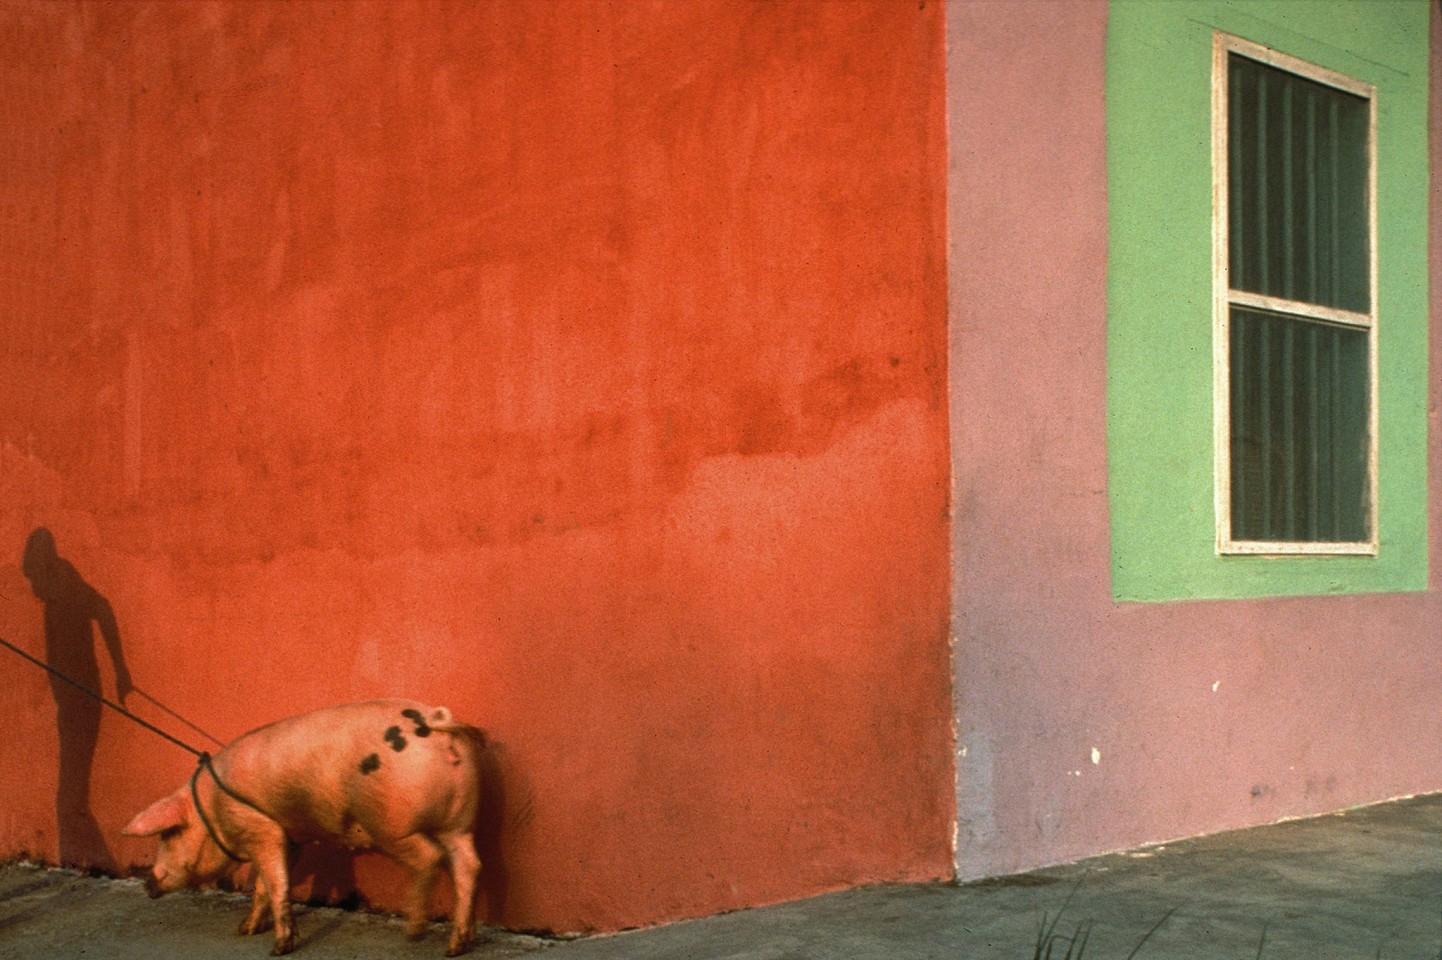 Jeffrey Becom, Pink Pig and Painted Walls, Tlacotalpan, Veracruz, Mexico
1992, Ilfochrome print